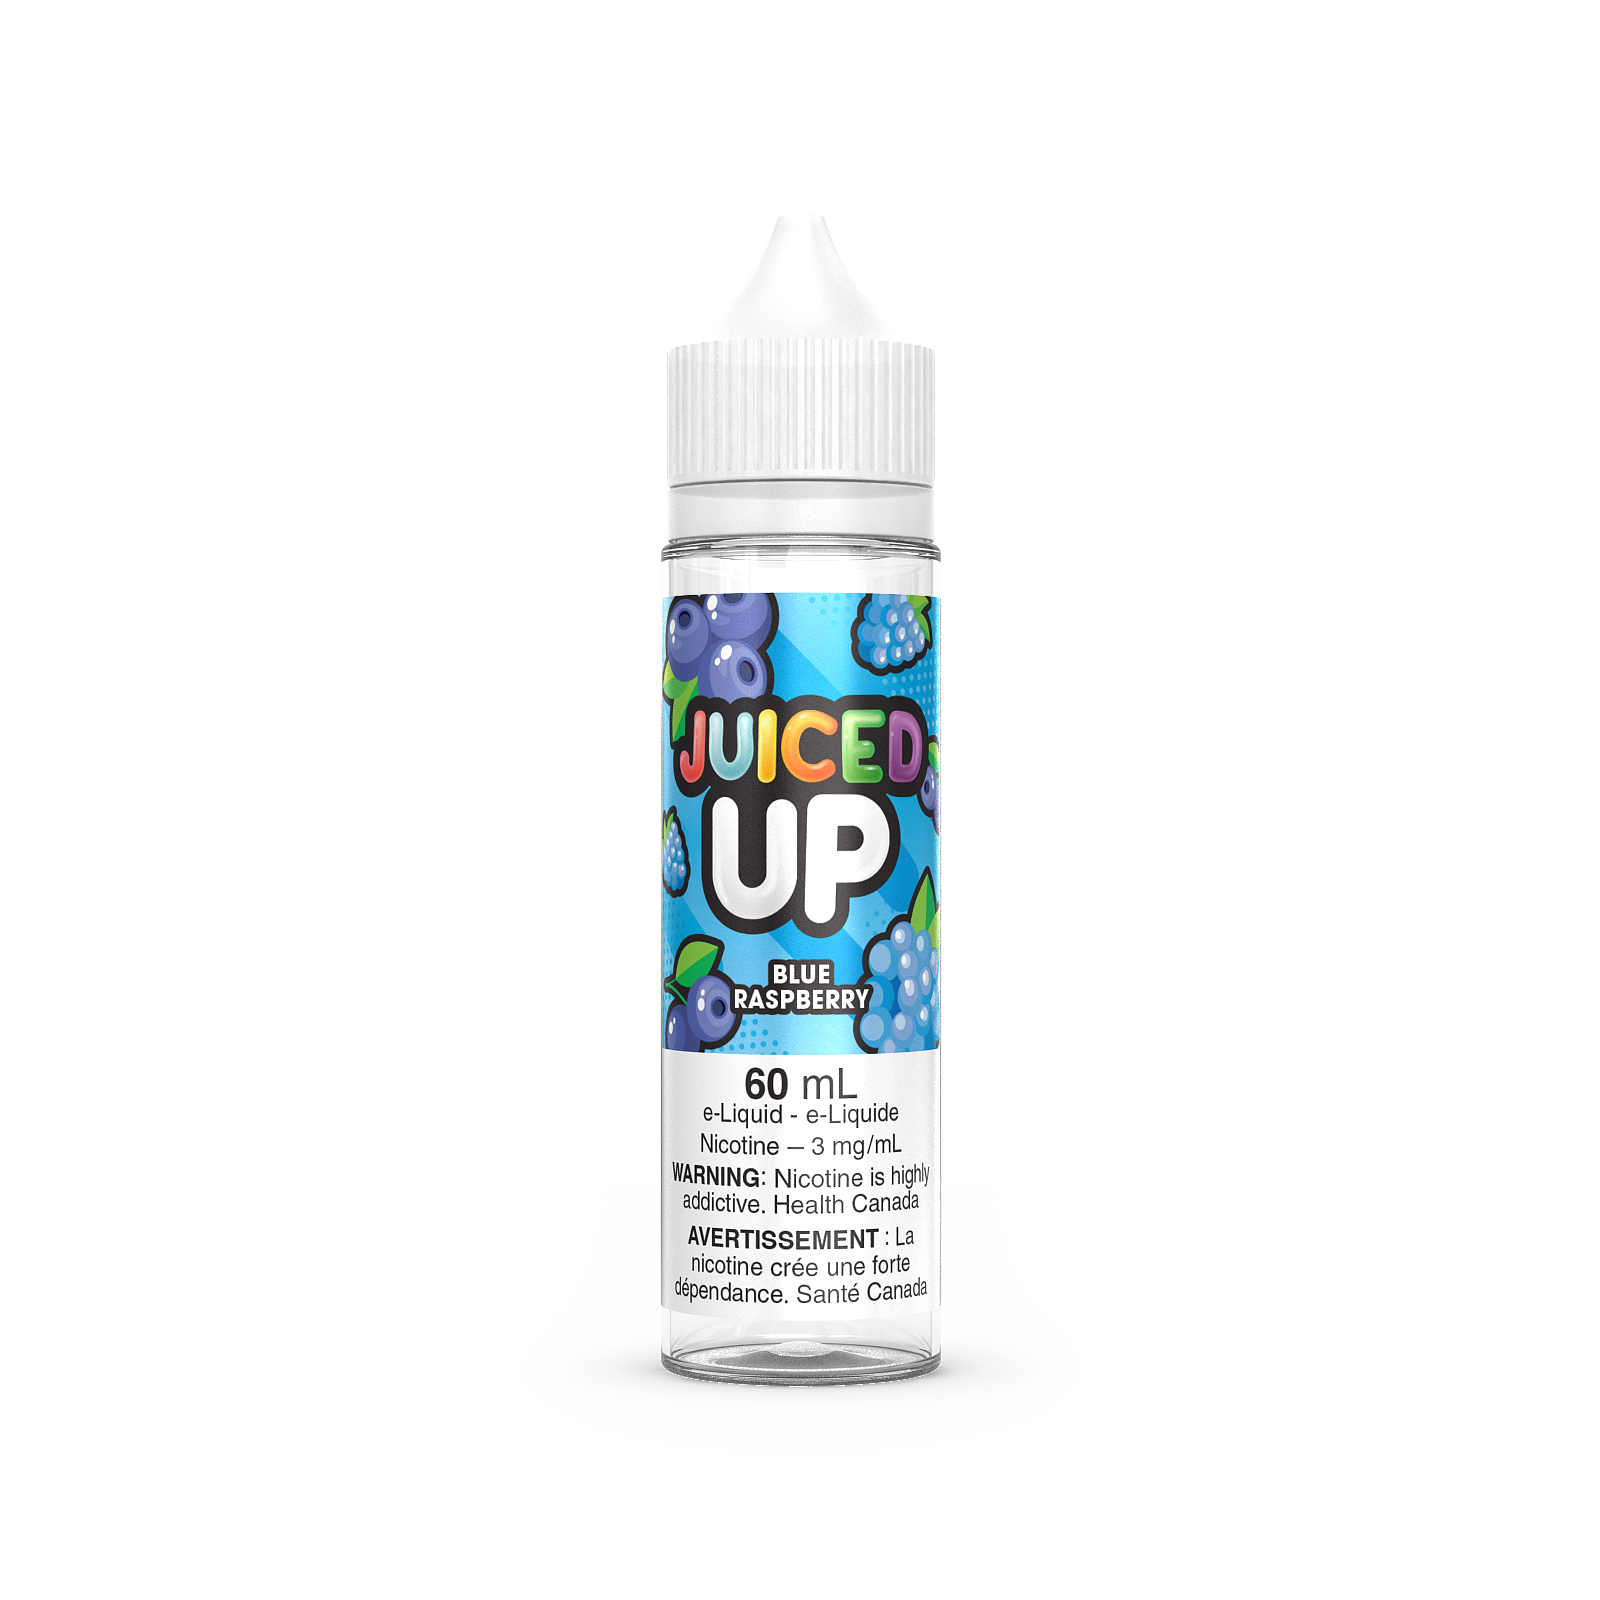 Juiced Up - Blue Raspberry (EXCISE TAXED) - VIP VAPE